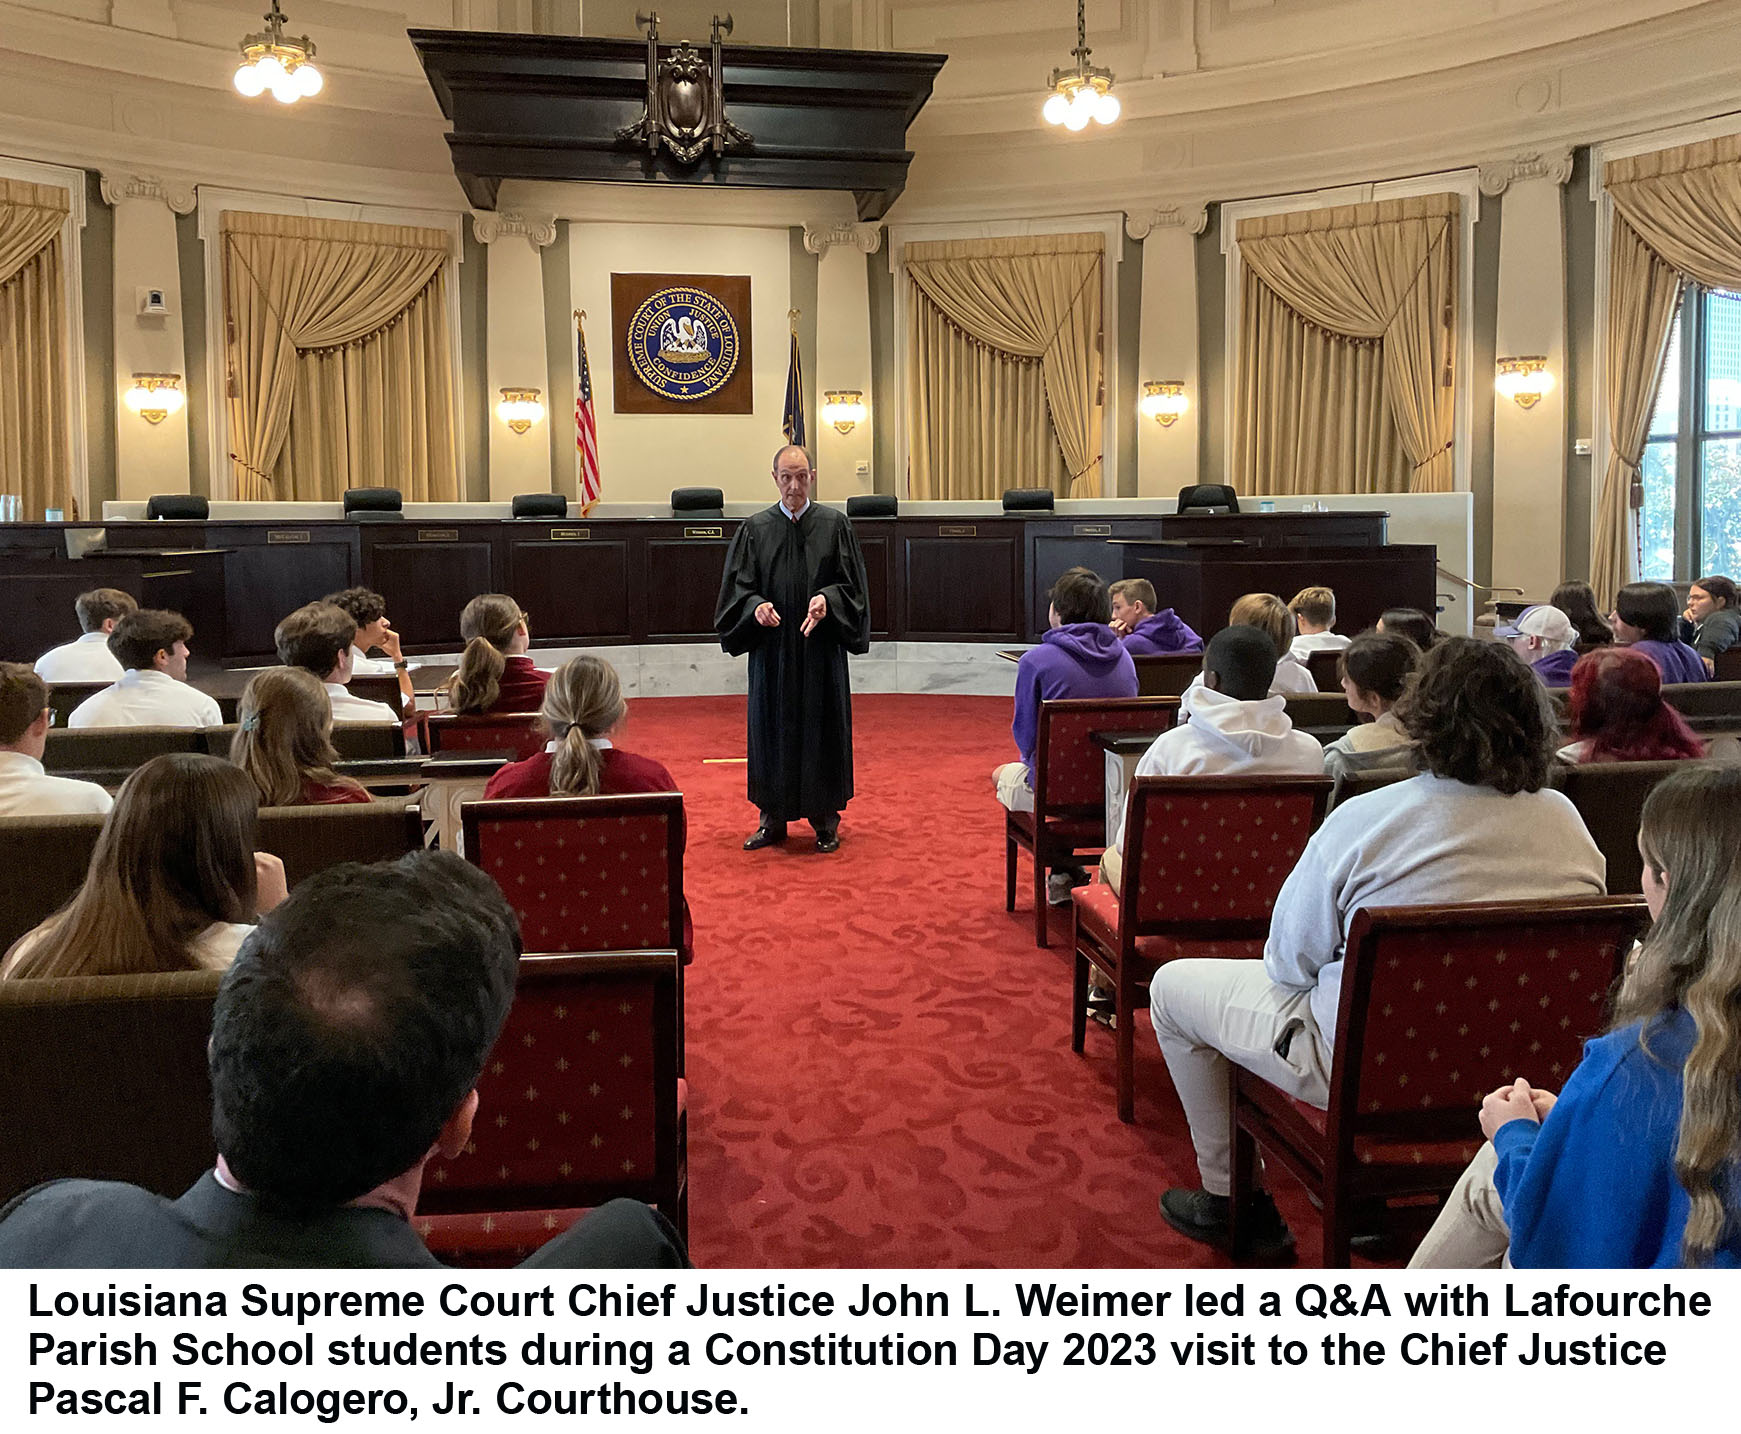 Louisiana Supreme Court Chief Justice John L. Weimer hosts